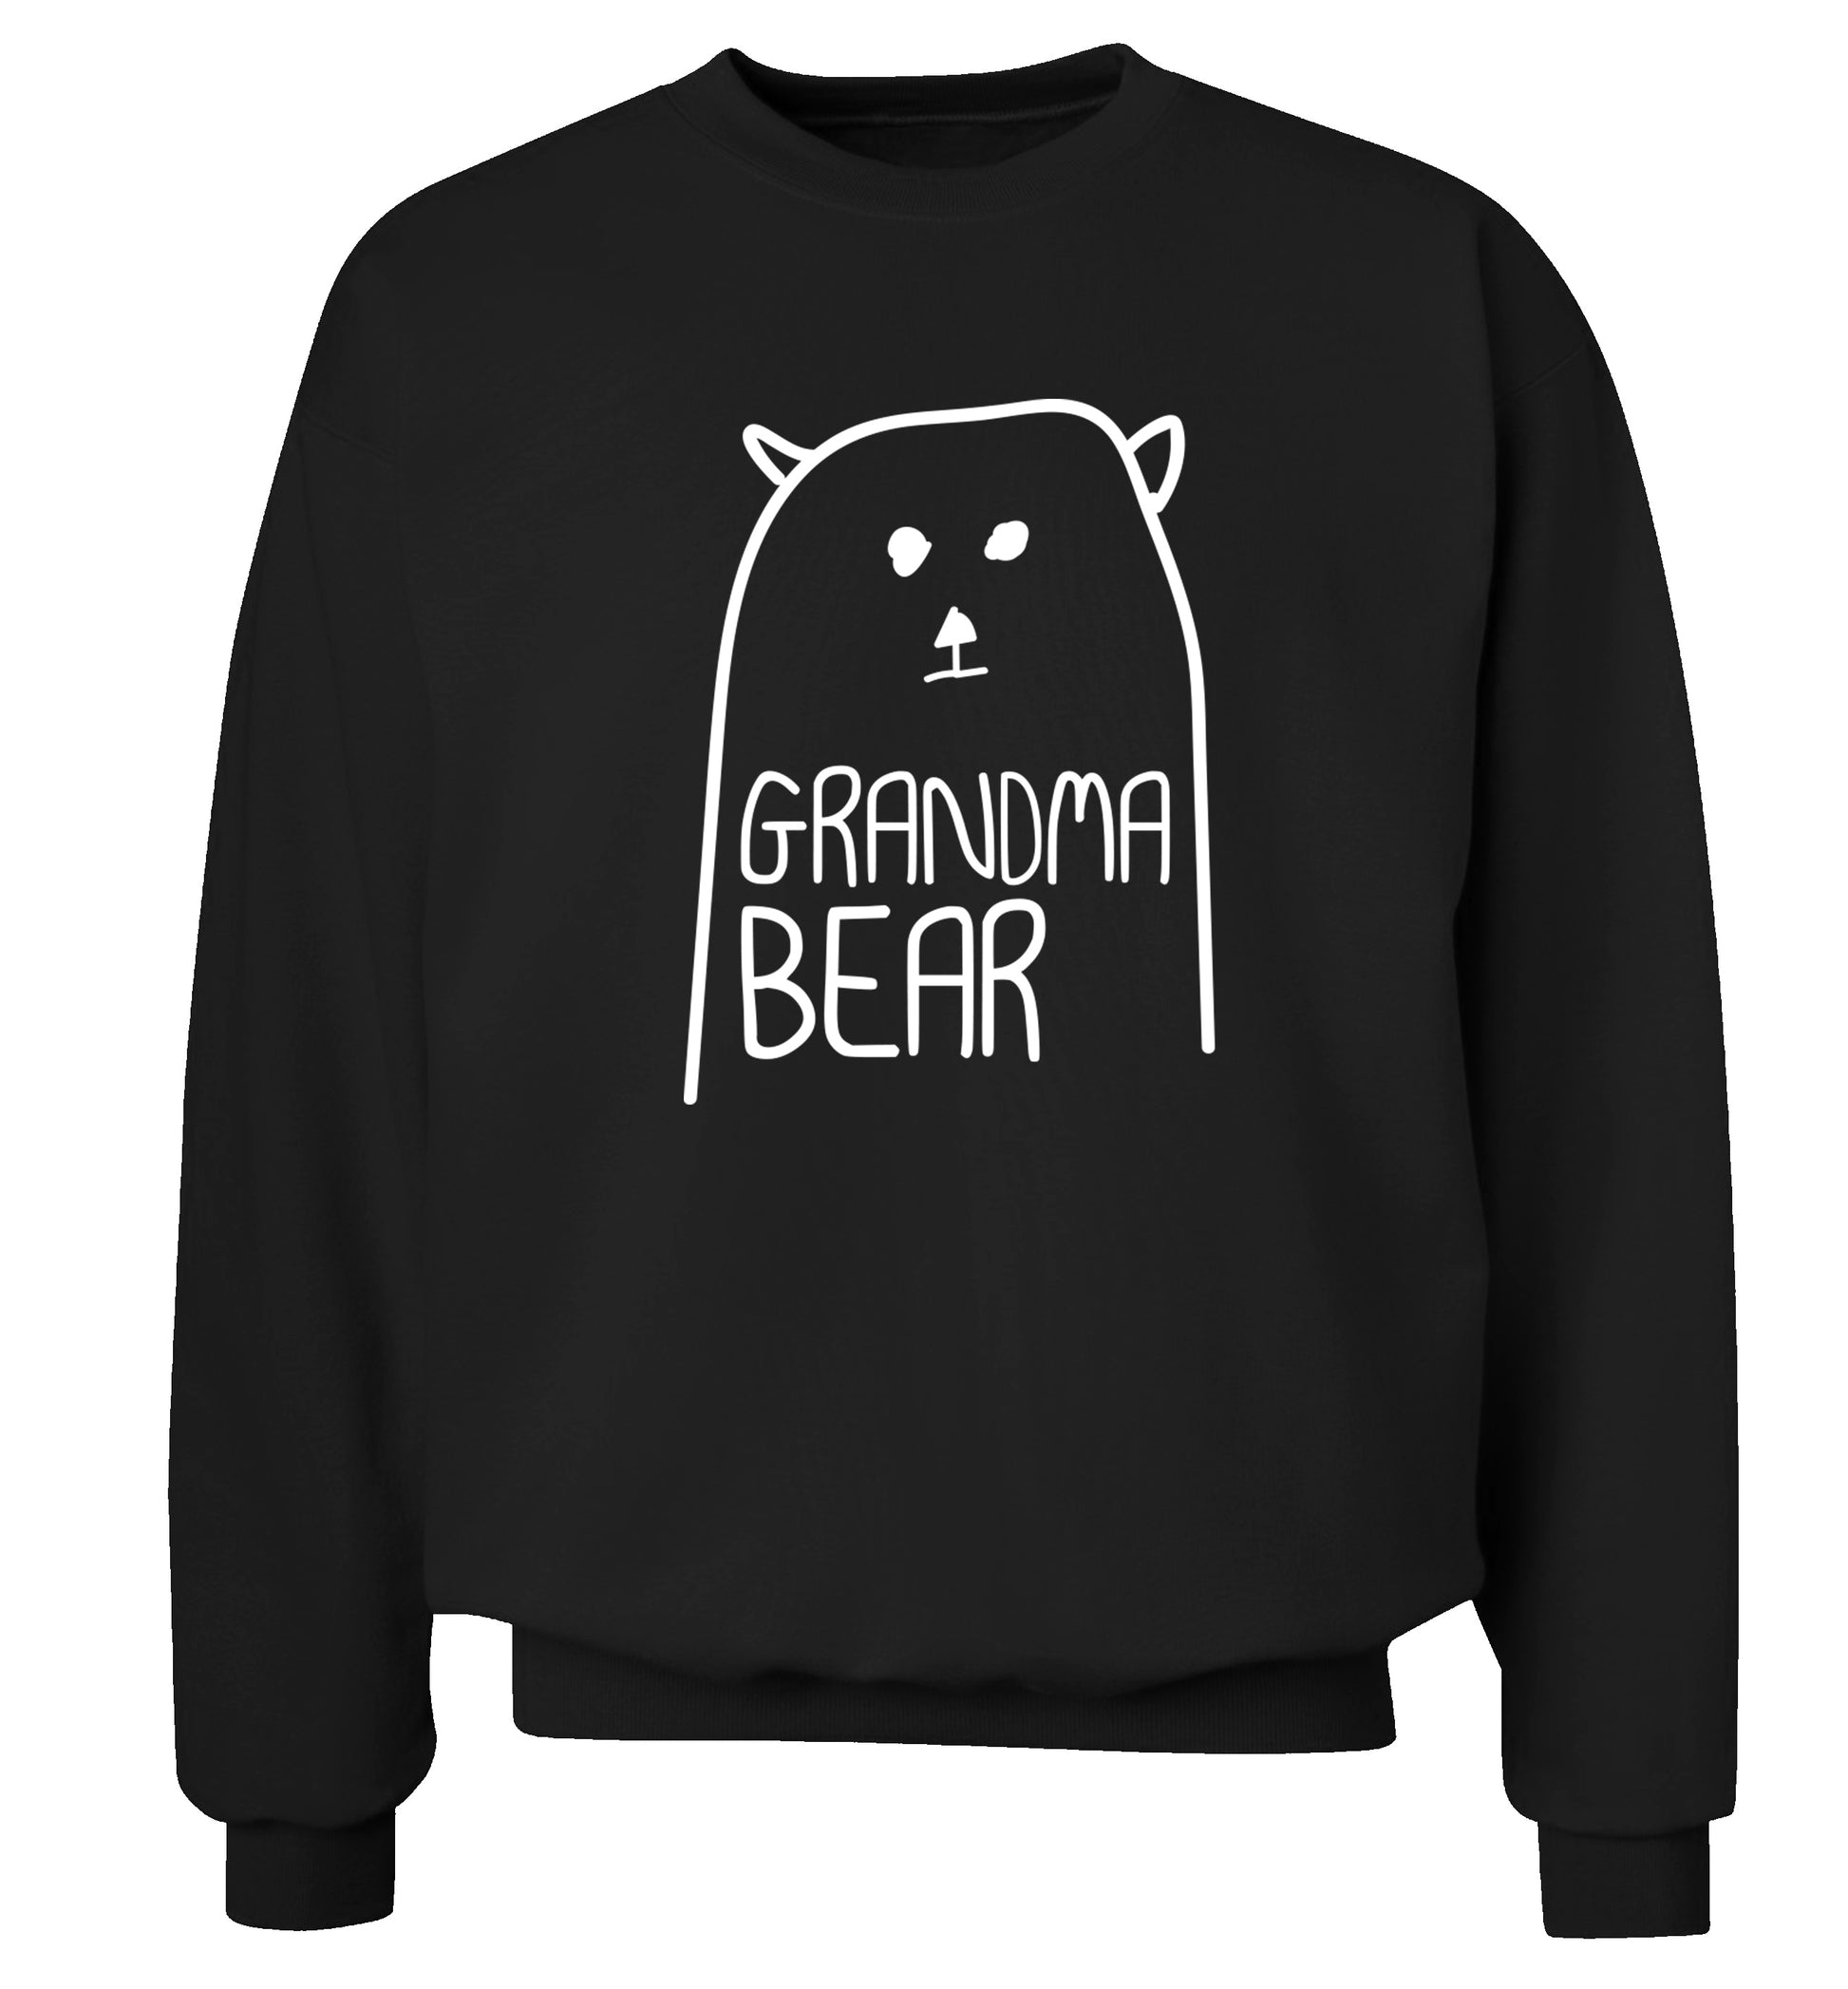 Grandma bear Adult's unisex black Sweater 2XL